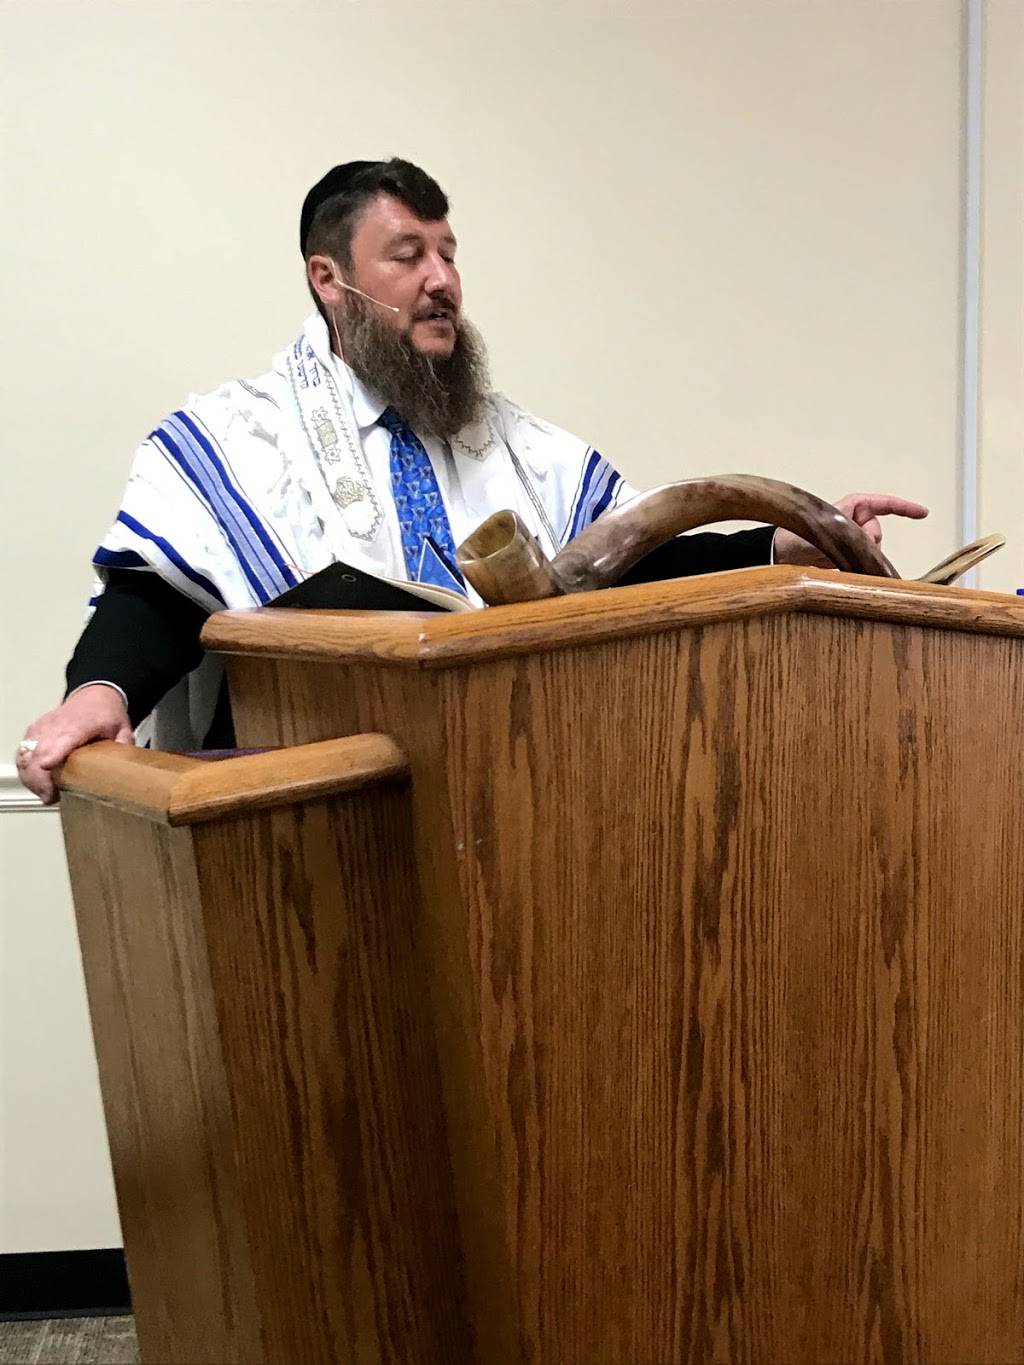 Sar Shalom Synagogue Tulsa | 1124 E Charles Page Blvd #500, Sand Springs, OK 74063, USA | Phone: (918) 617-6444